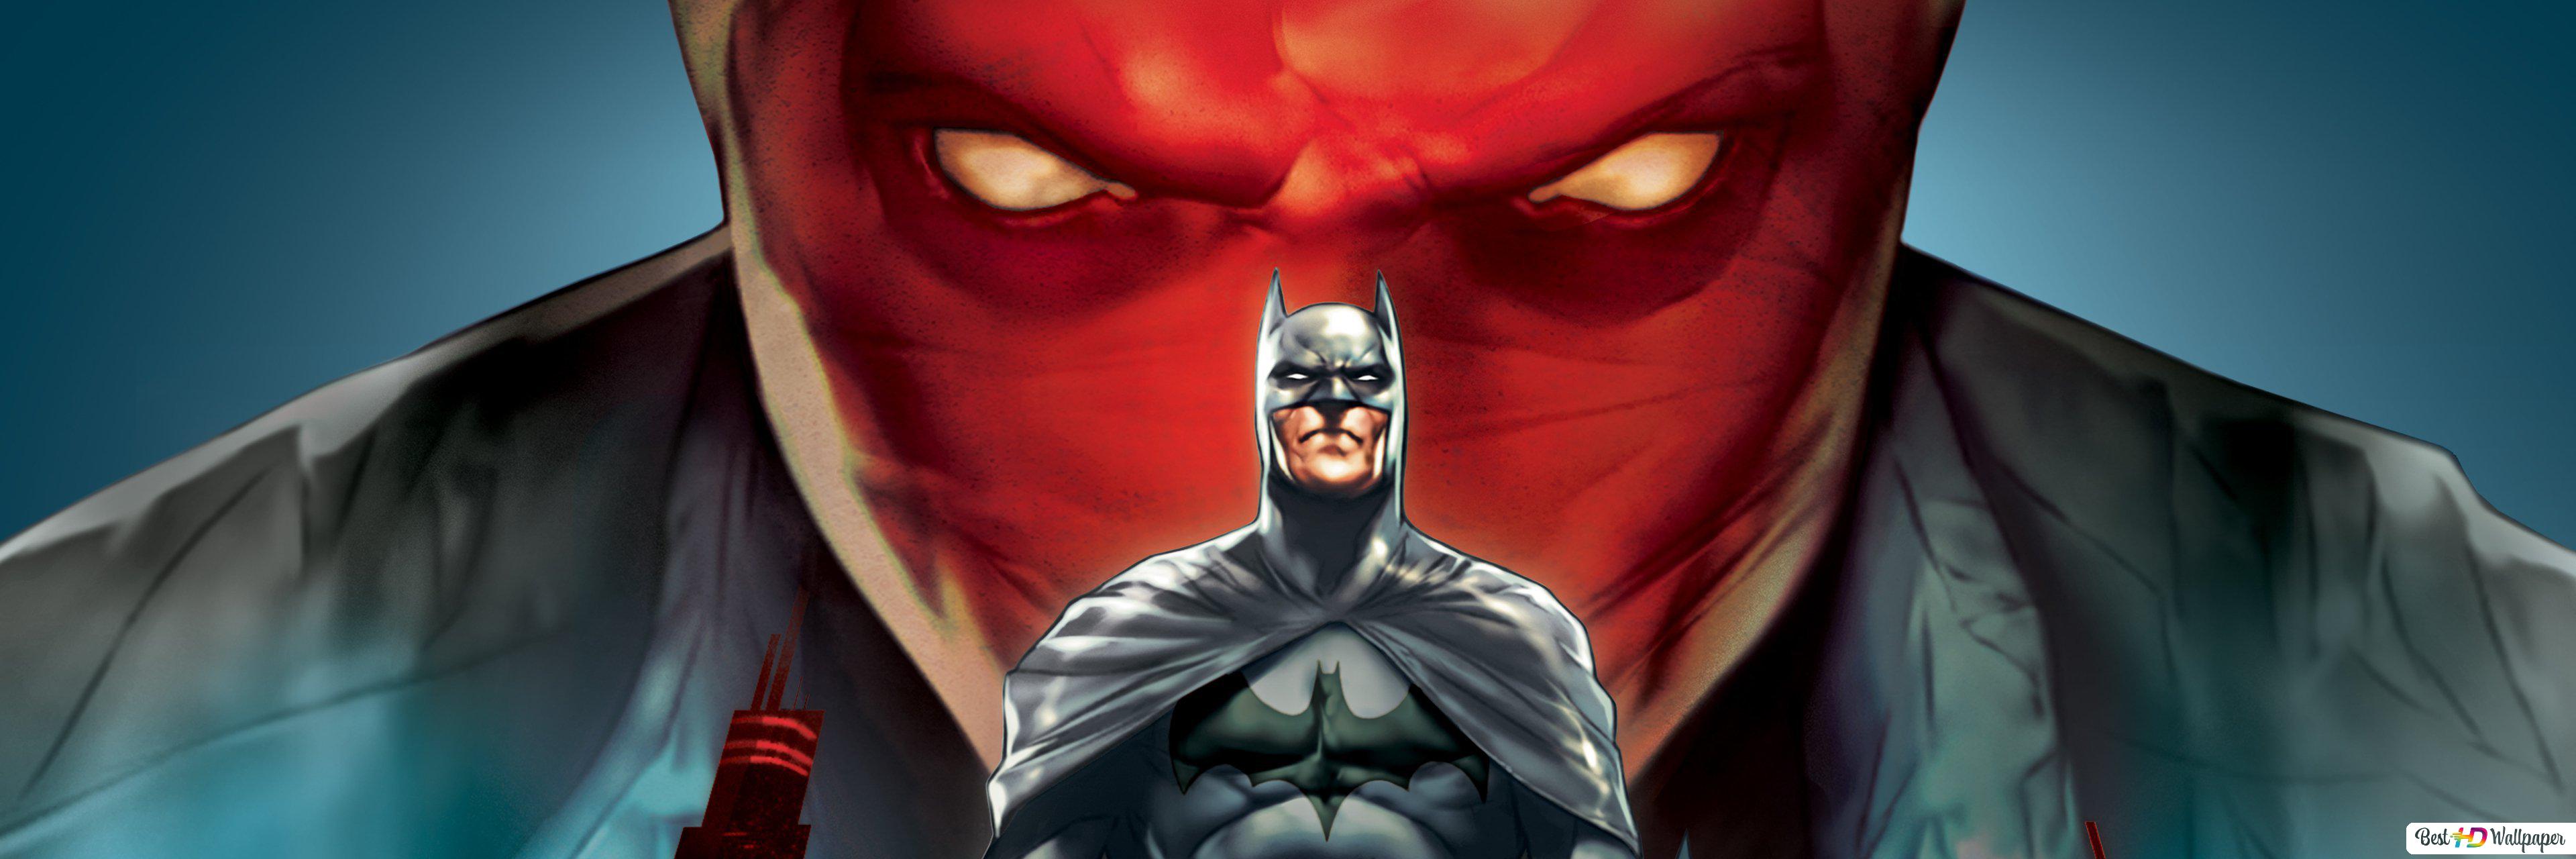 Batman: Under The Red Hood Wallpapers